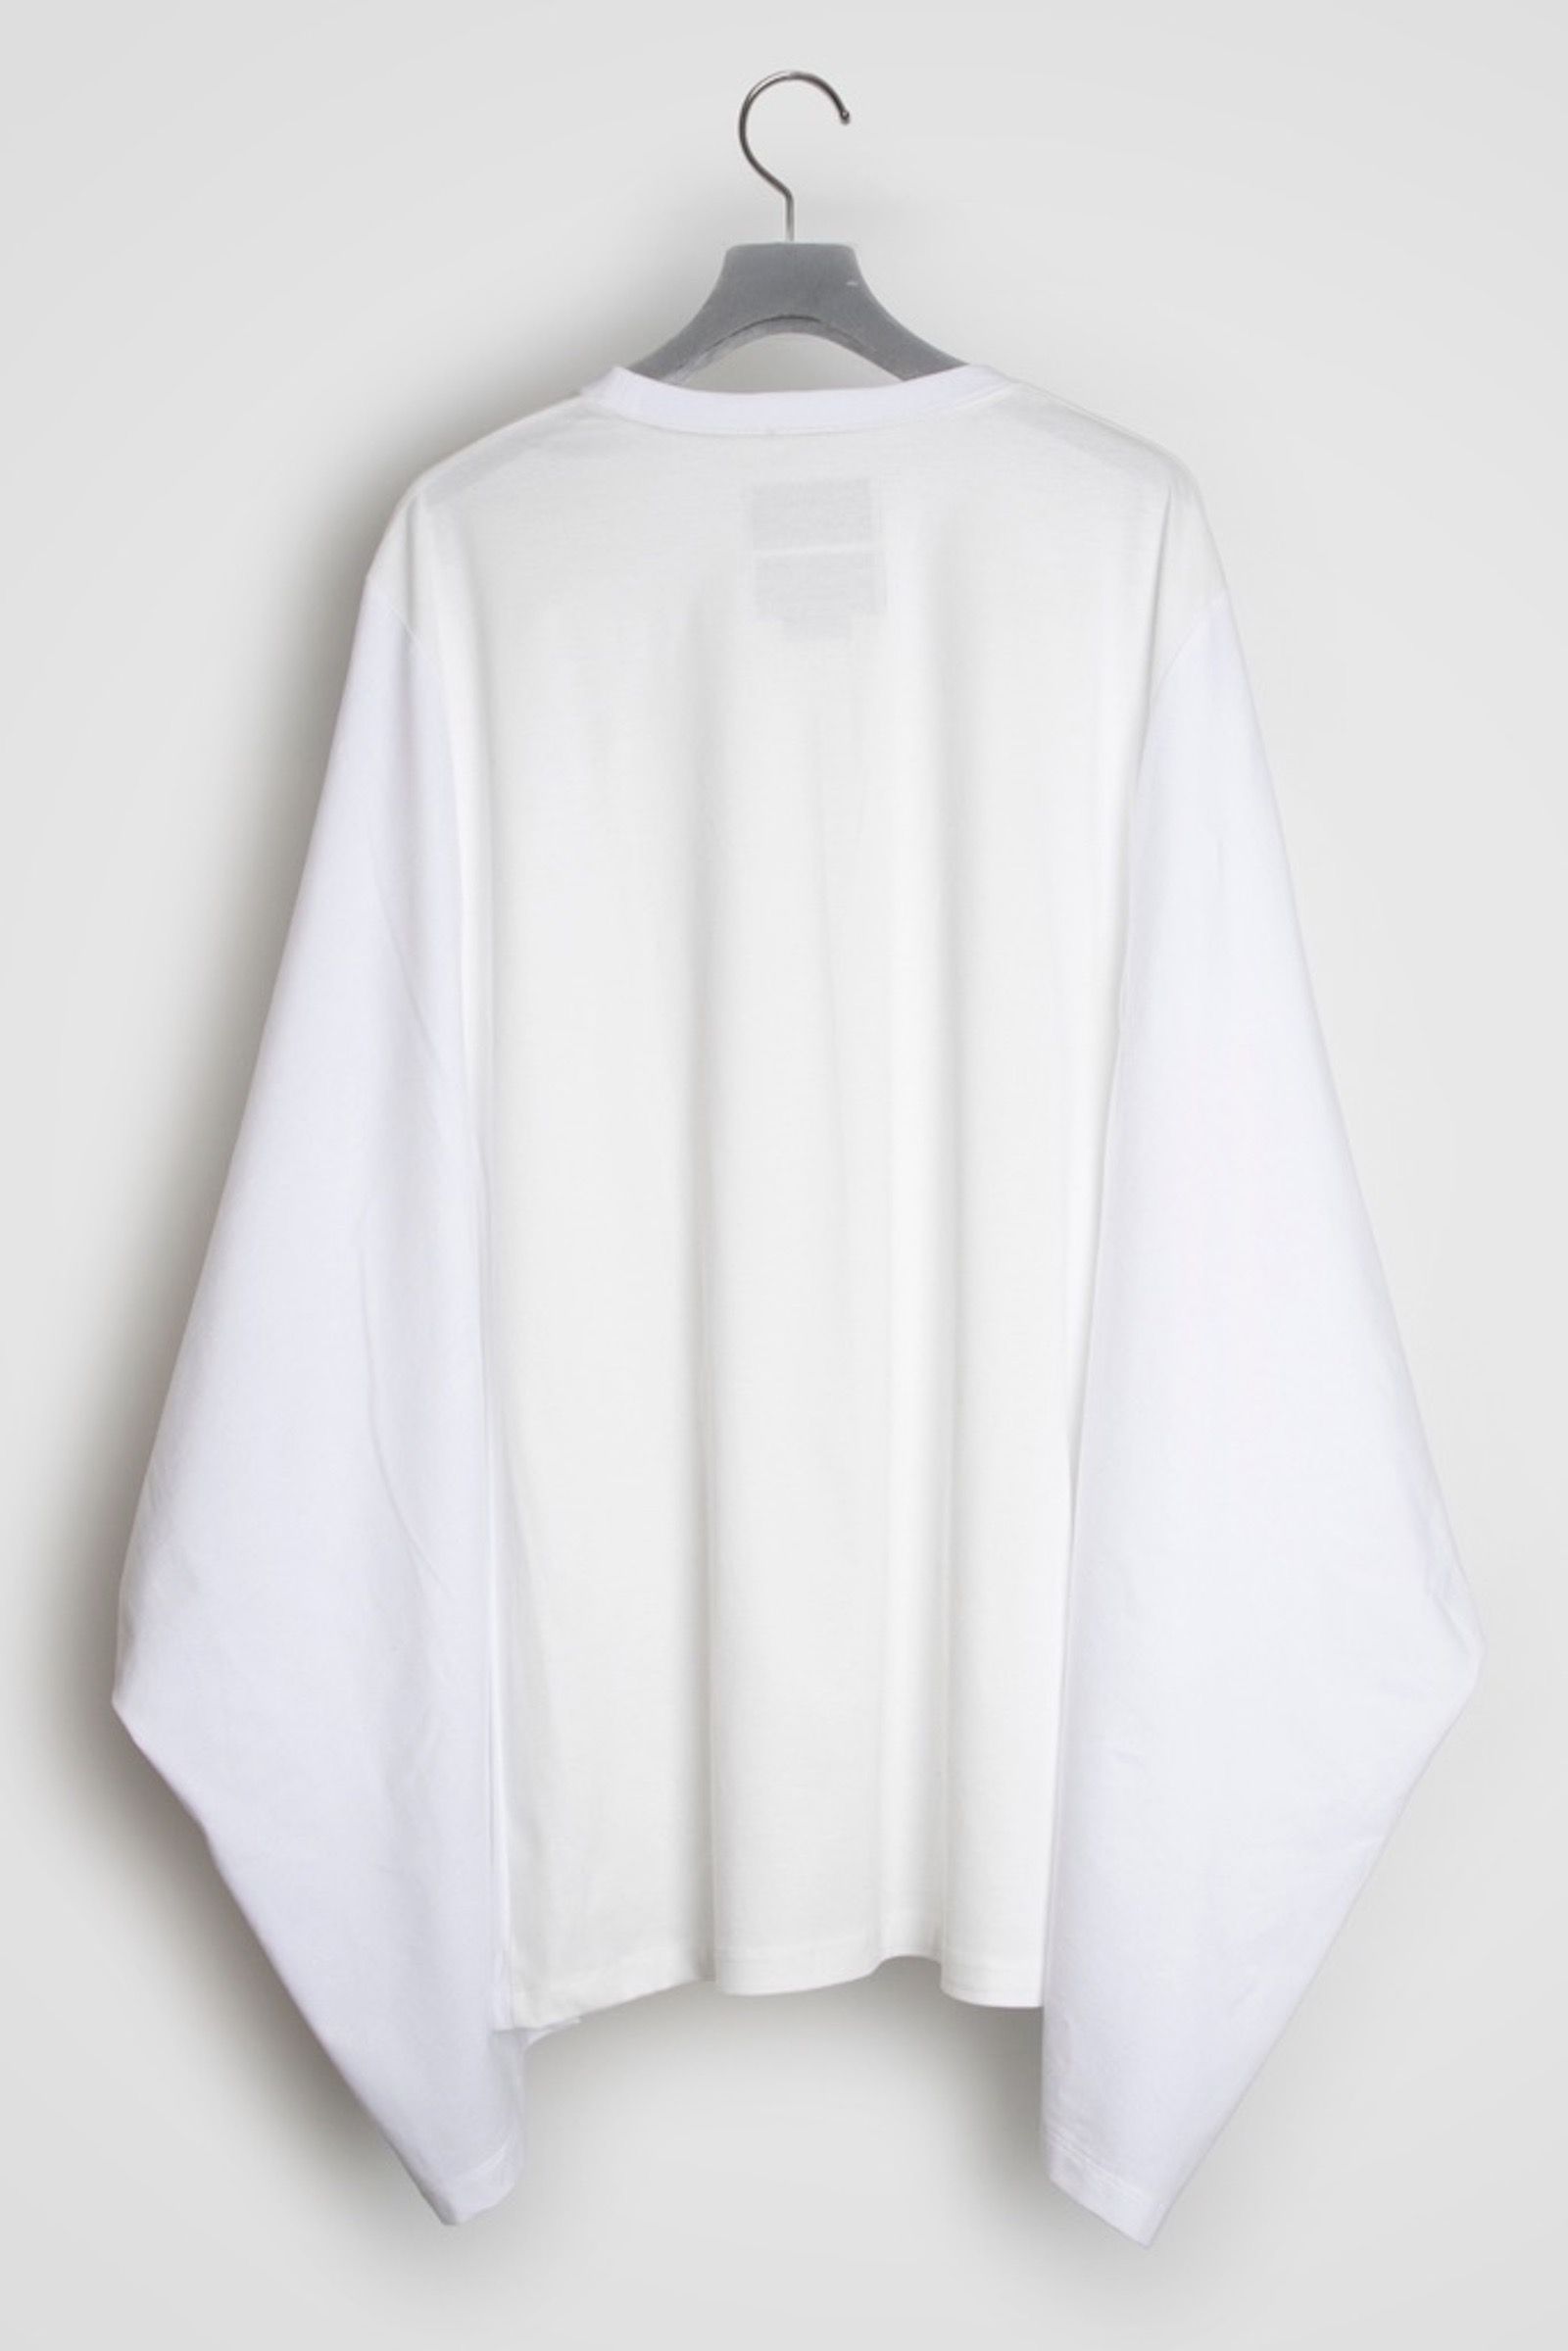 FUMITO GANRYU - king size rebuilt t-shirts 21aw | asterisk